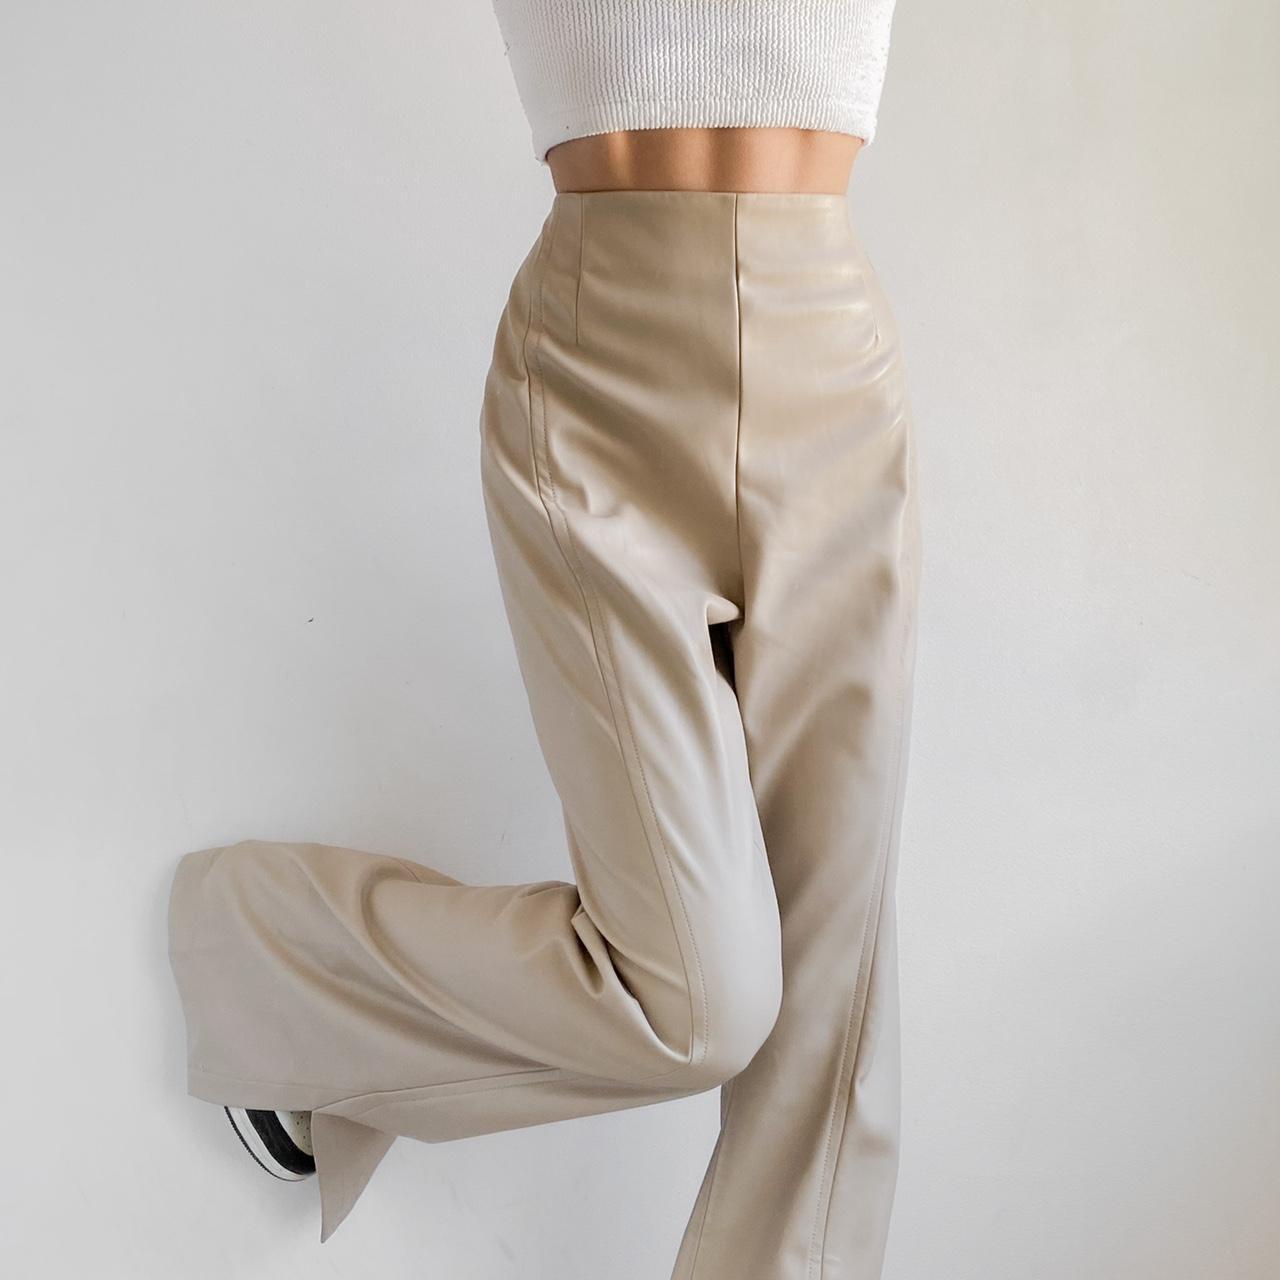 15 Stylish Leather Pants Outfits | Natalie Yerger